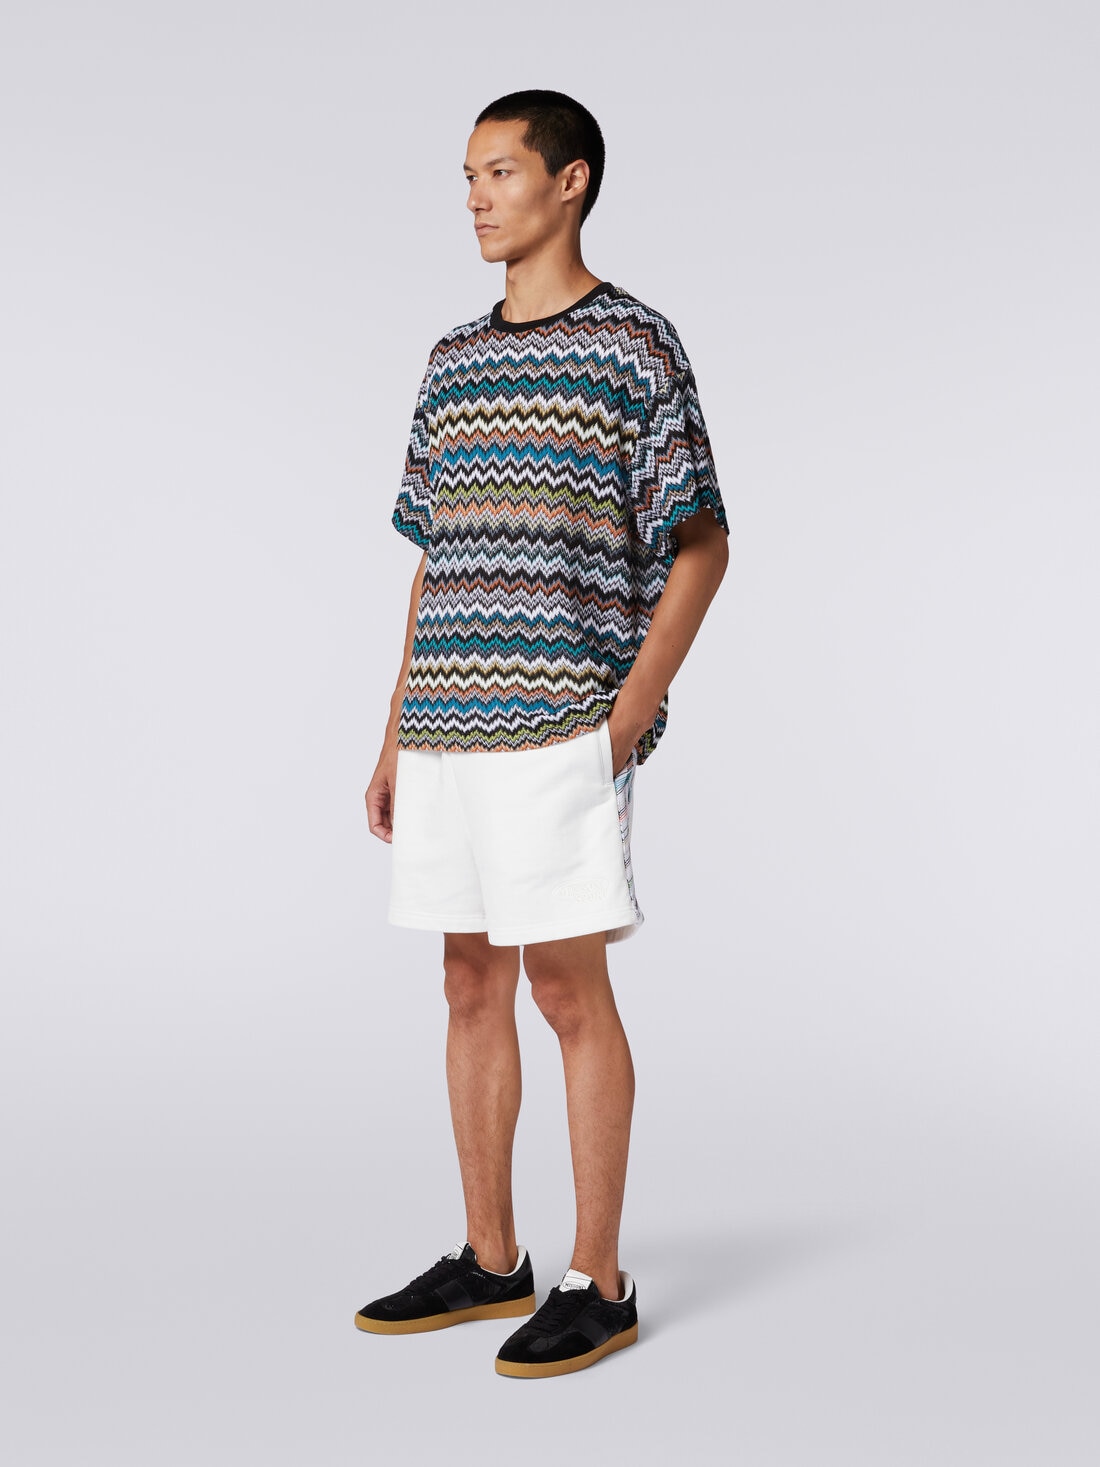 Crew-neck T-shirt in zigzag cotton knit, Multicoloured  - TS24SL03BR00UUSM9AX - 2